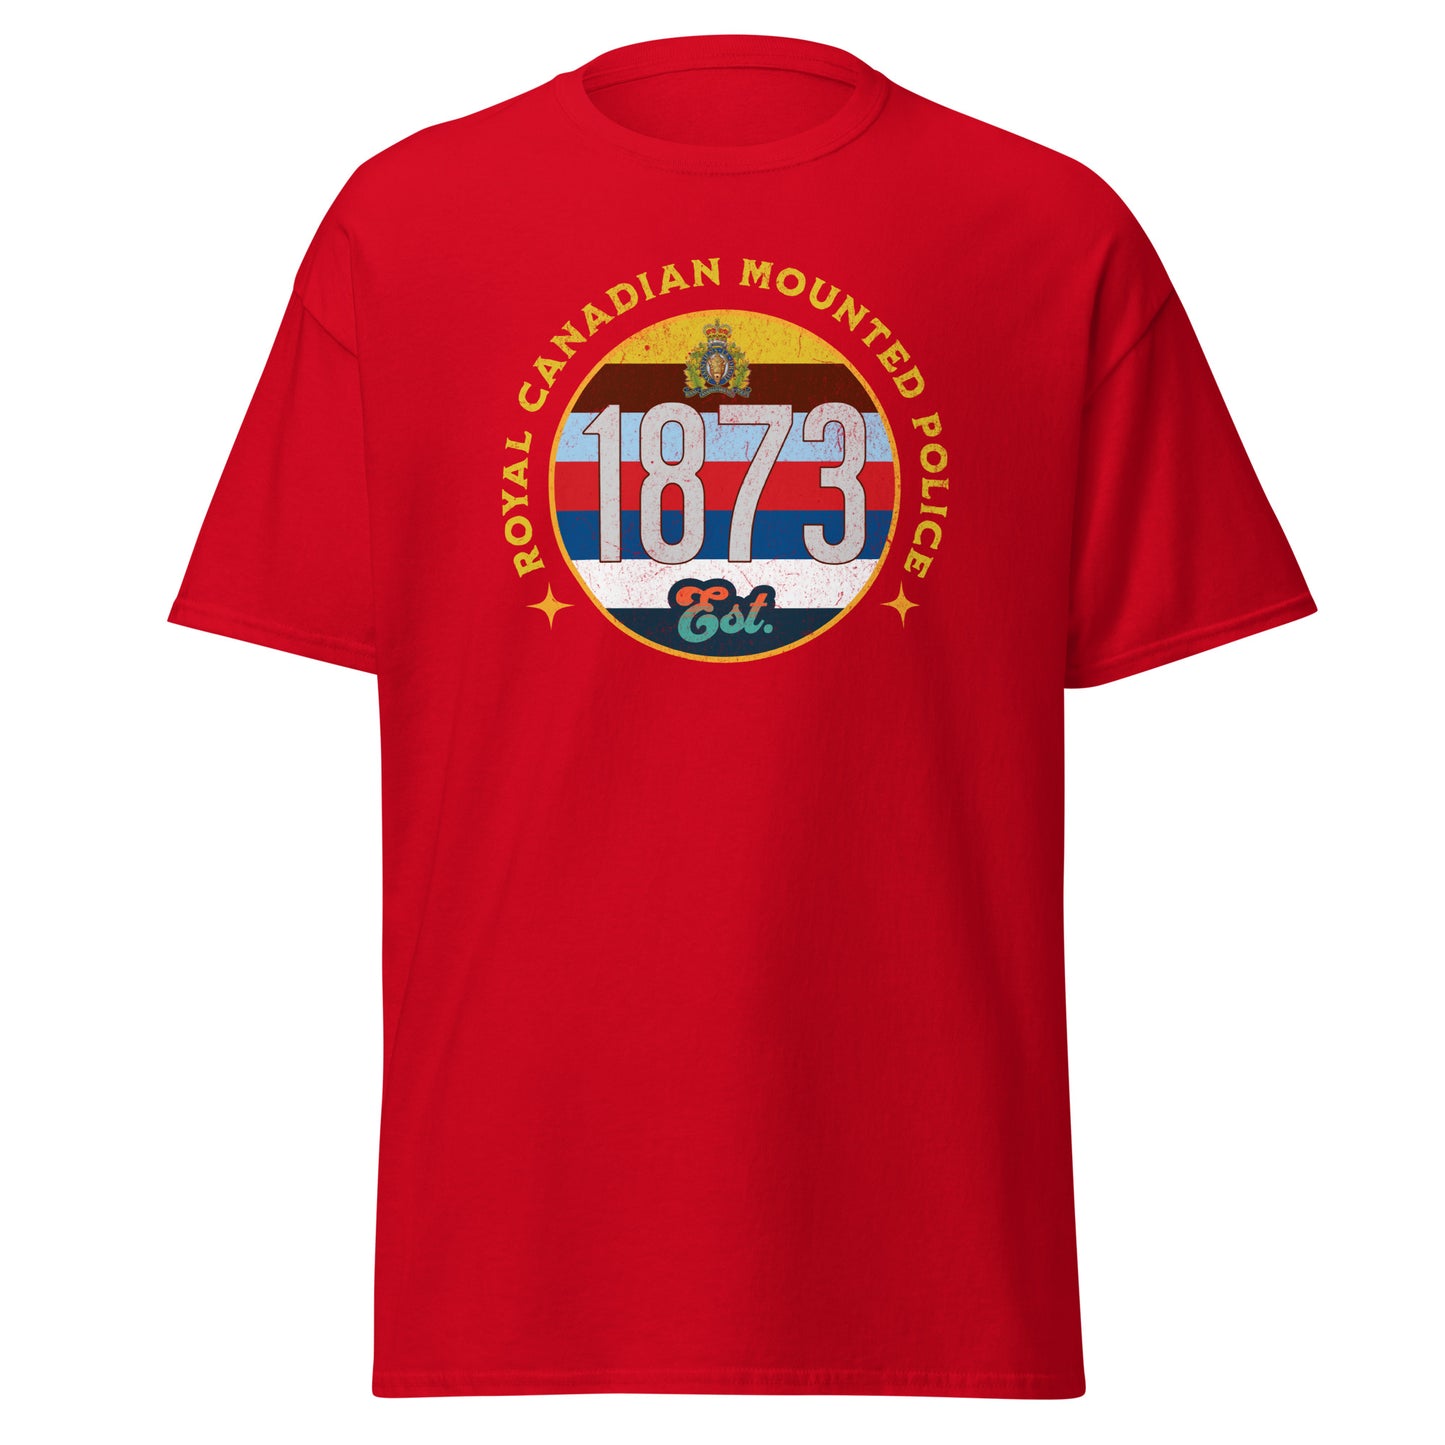 RCMP Men's T-Shirt, Royal Canadian Mounted Police Established 1873 M1